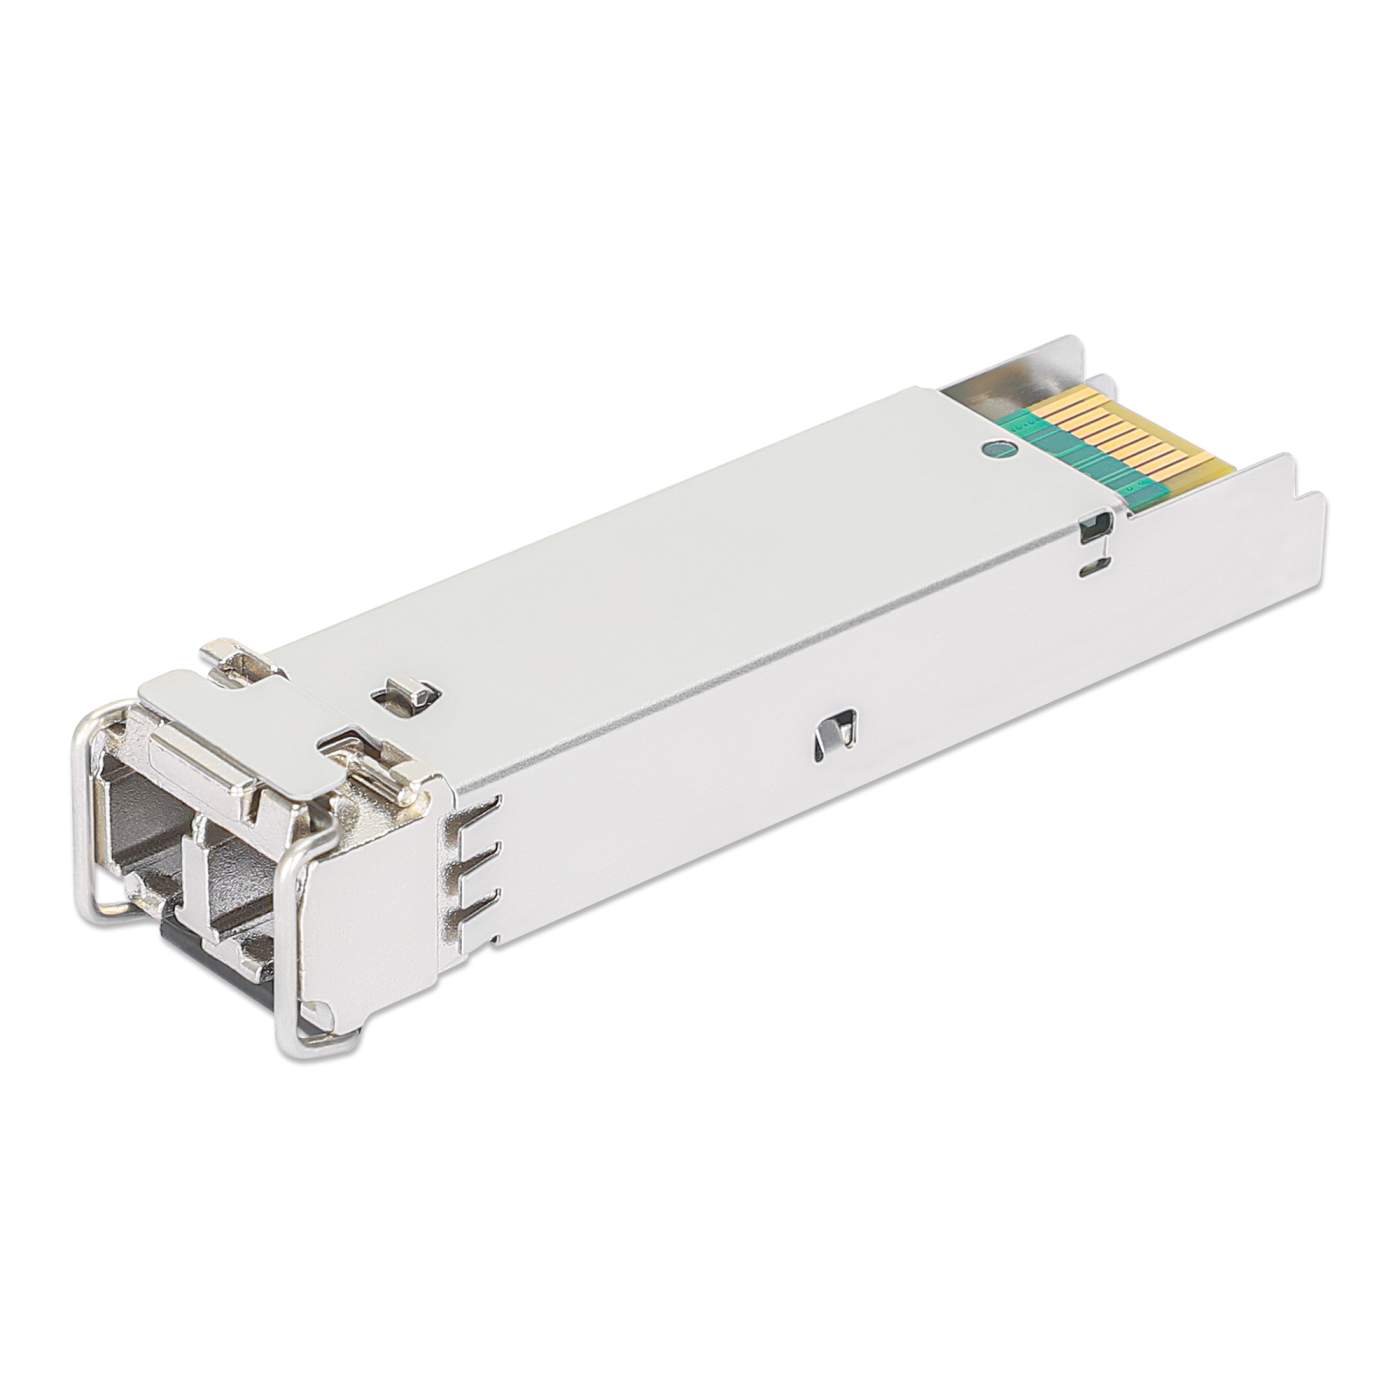 Gigabit Fiber SFP Optical Transceiver Module Image 3